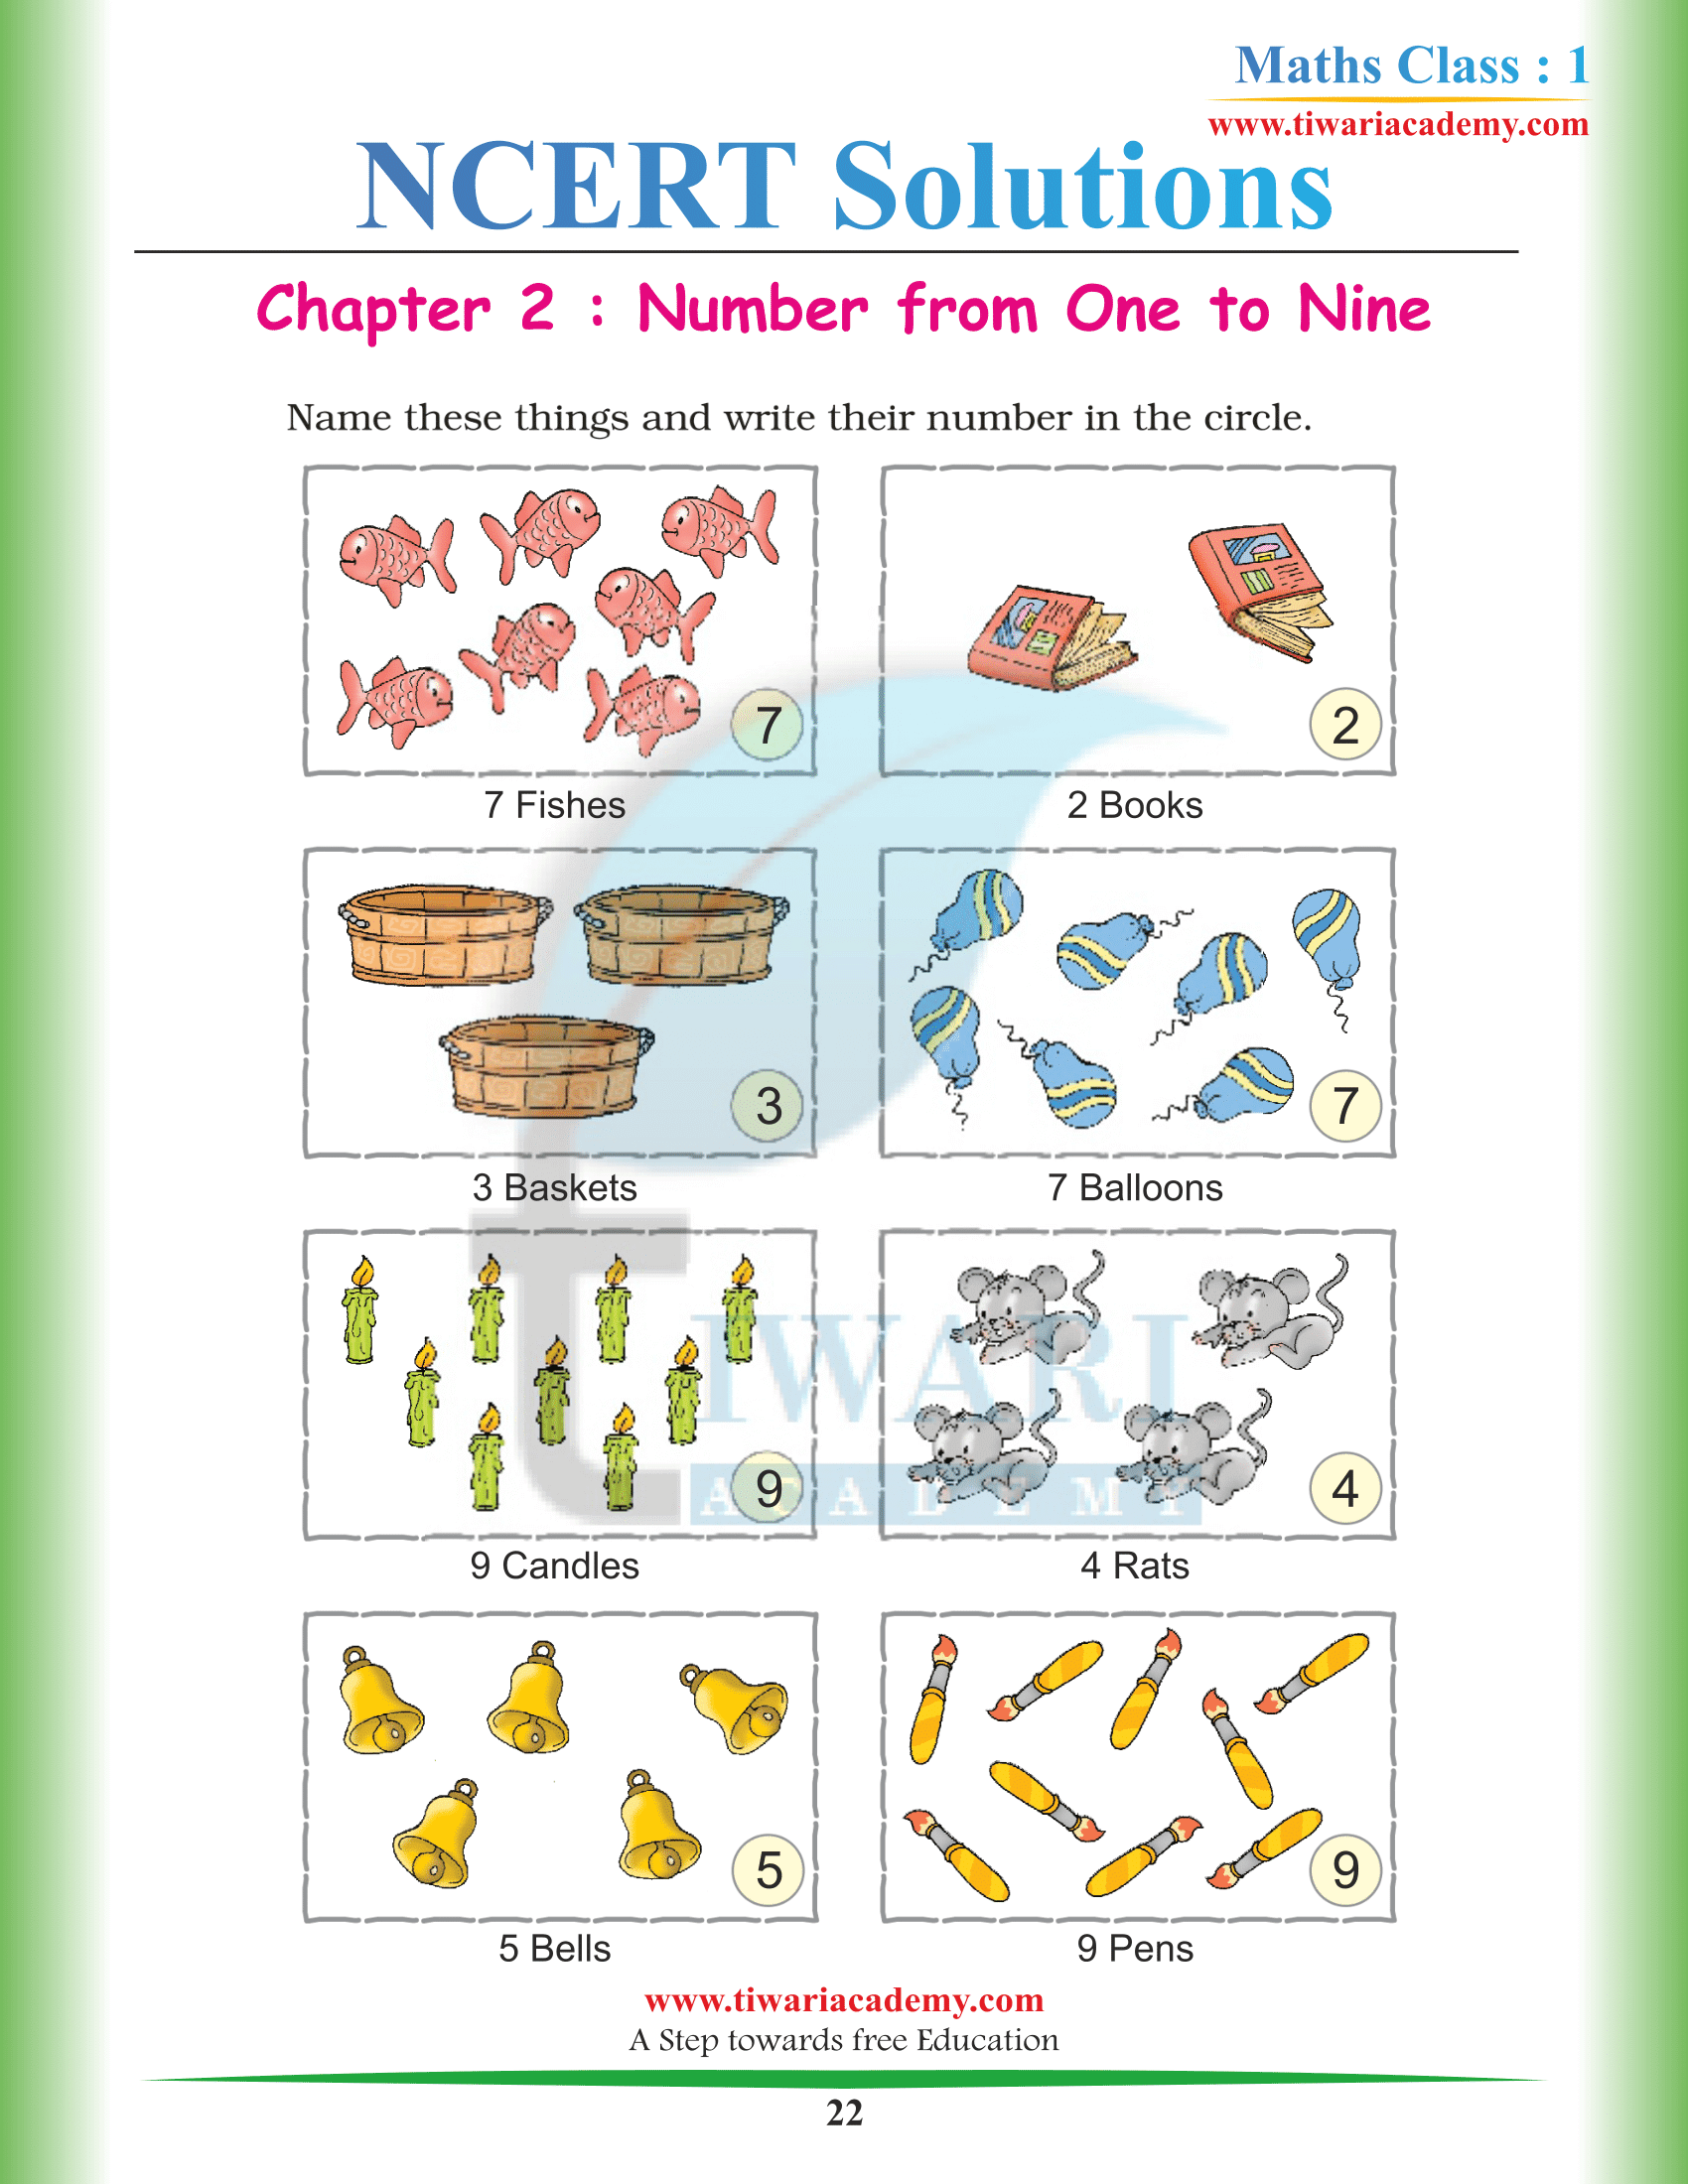 Class 1st Maths Chapter 2 all question solutions